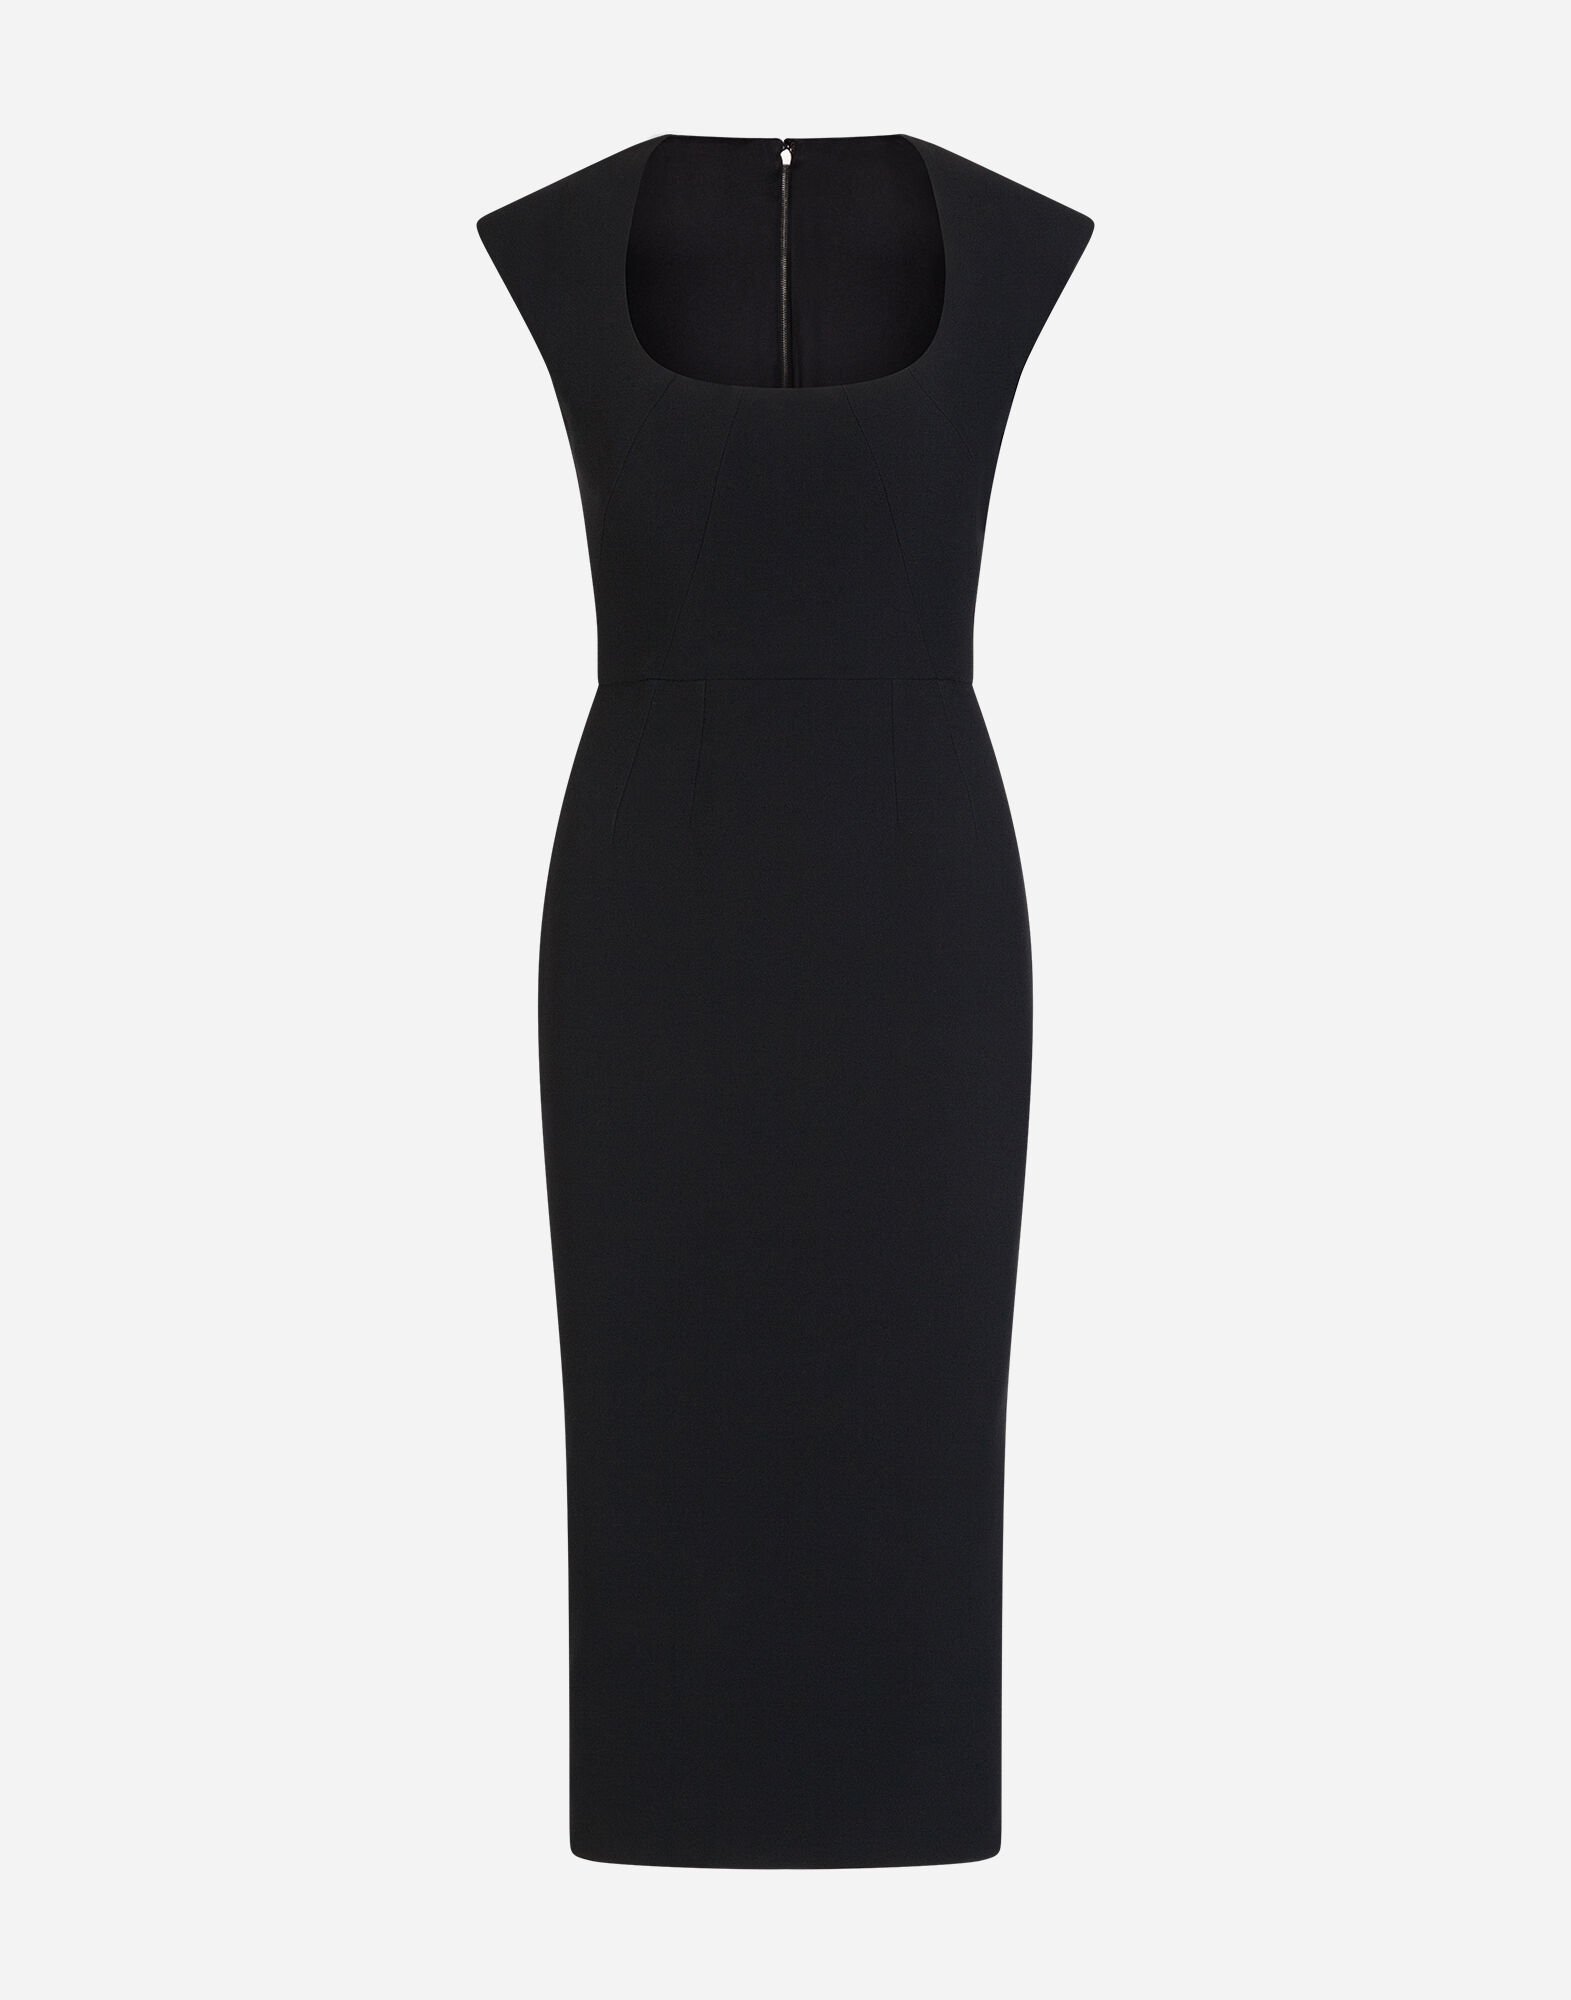 Dolce&Gabbana Longuette dress in cady Black F6DIBTGDB2M